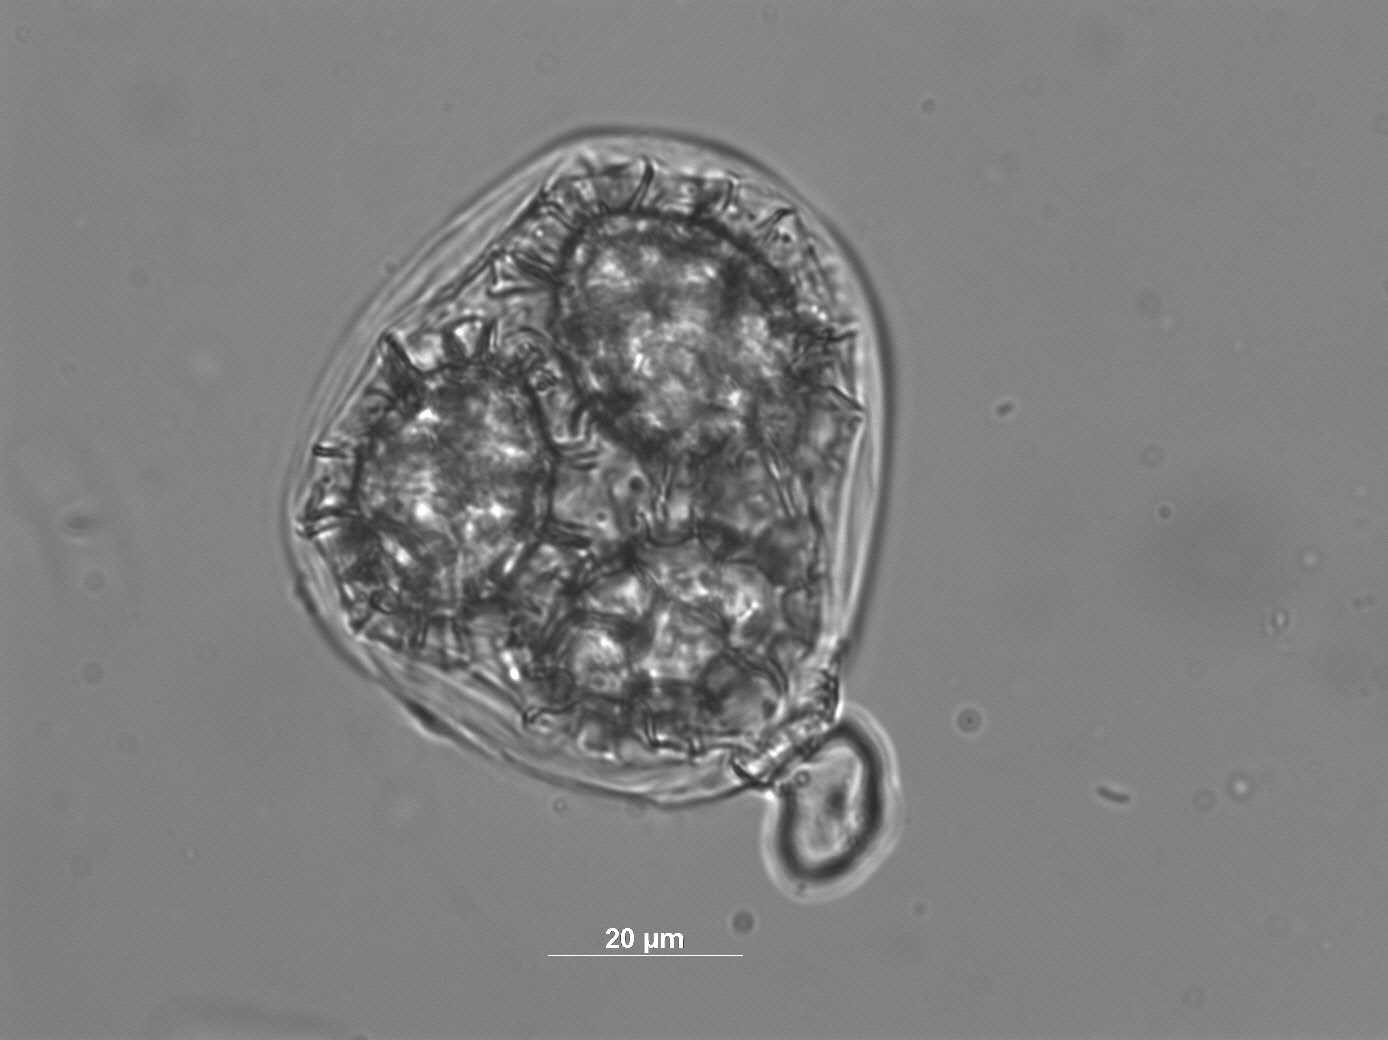 Tuber aestivum (Summer truffle) spores under the microscope